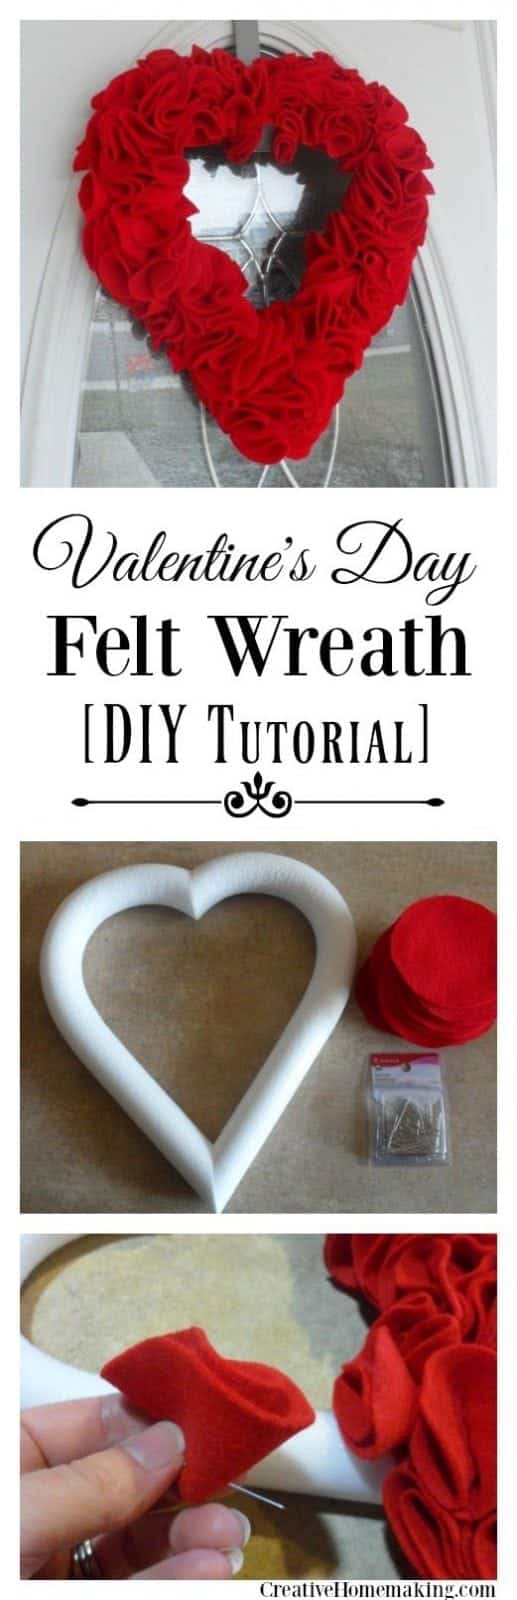 14 Valentine's Day DIY Wreath Ideas - Southern Charm Wreaths